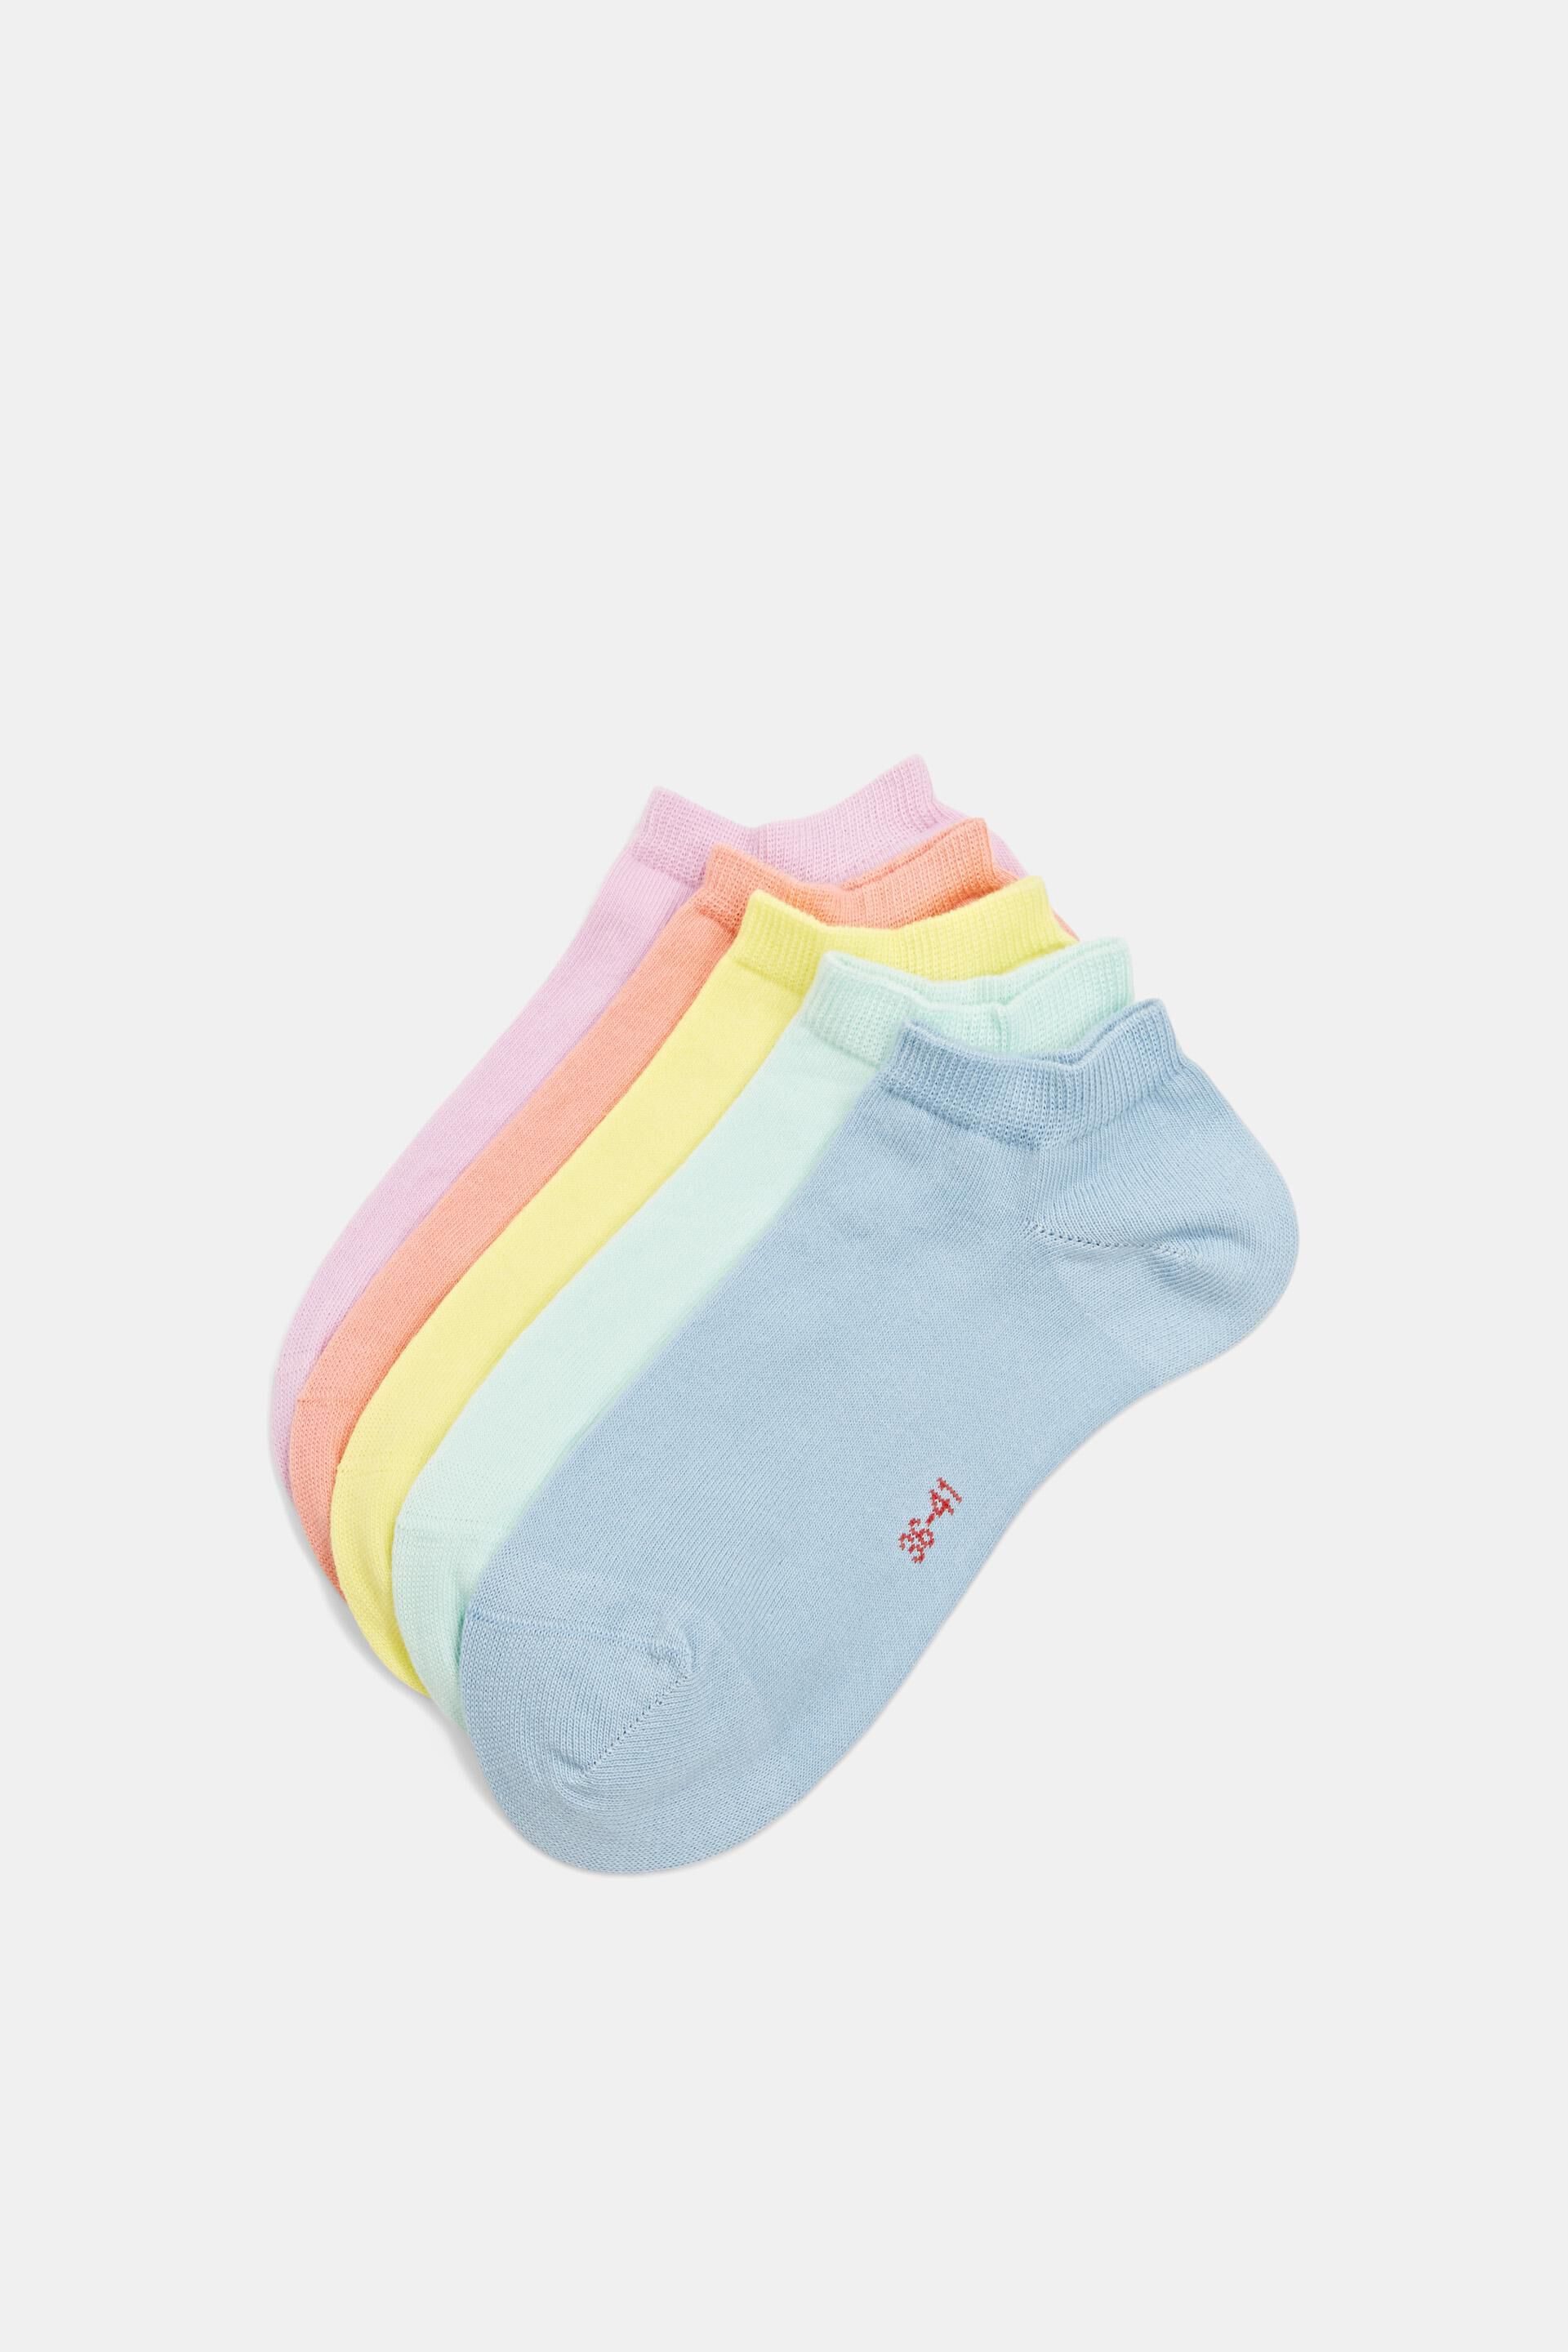 Esprit Online Store Five-pack of sneaker socks, blended organic cotton